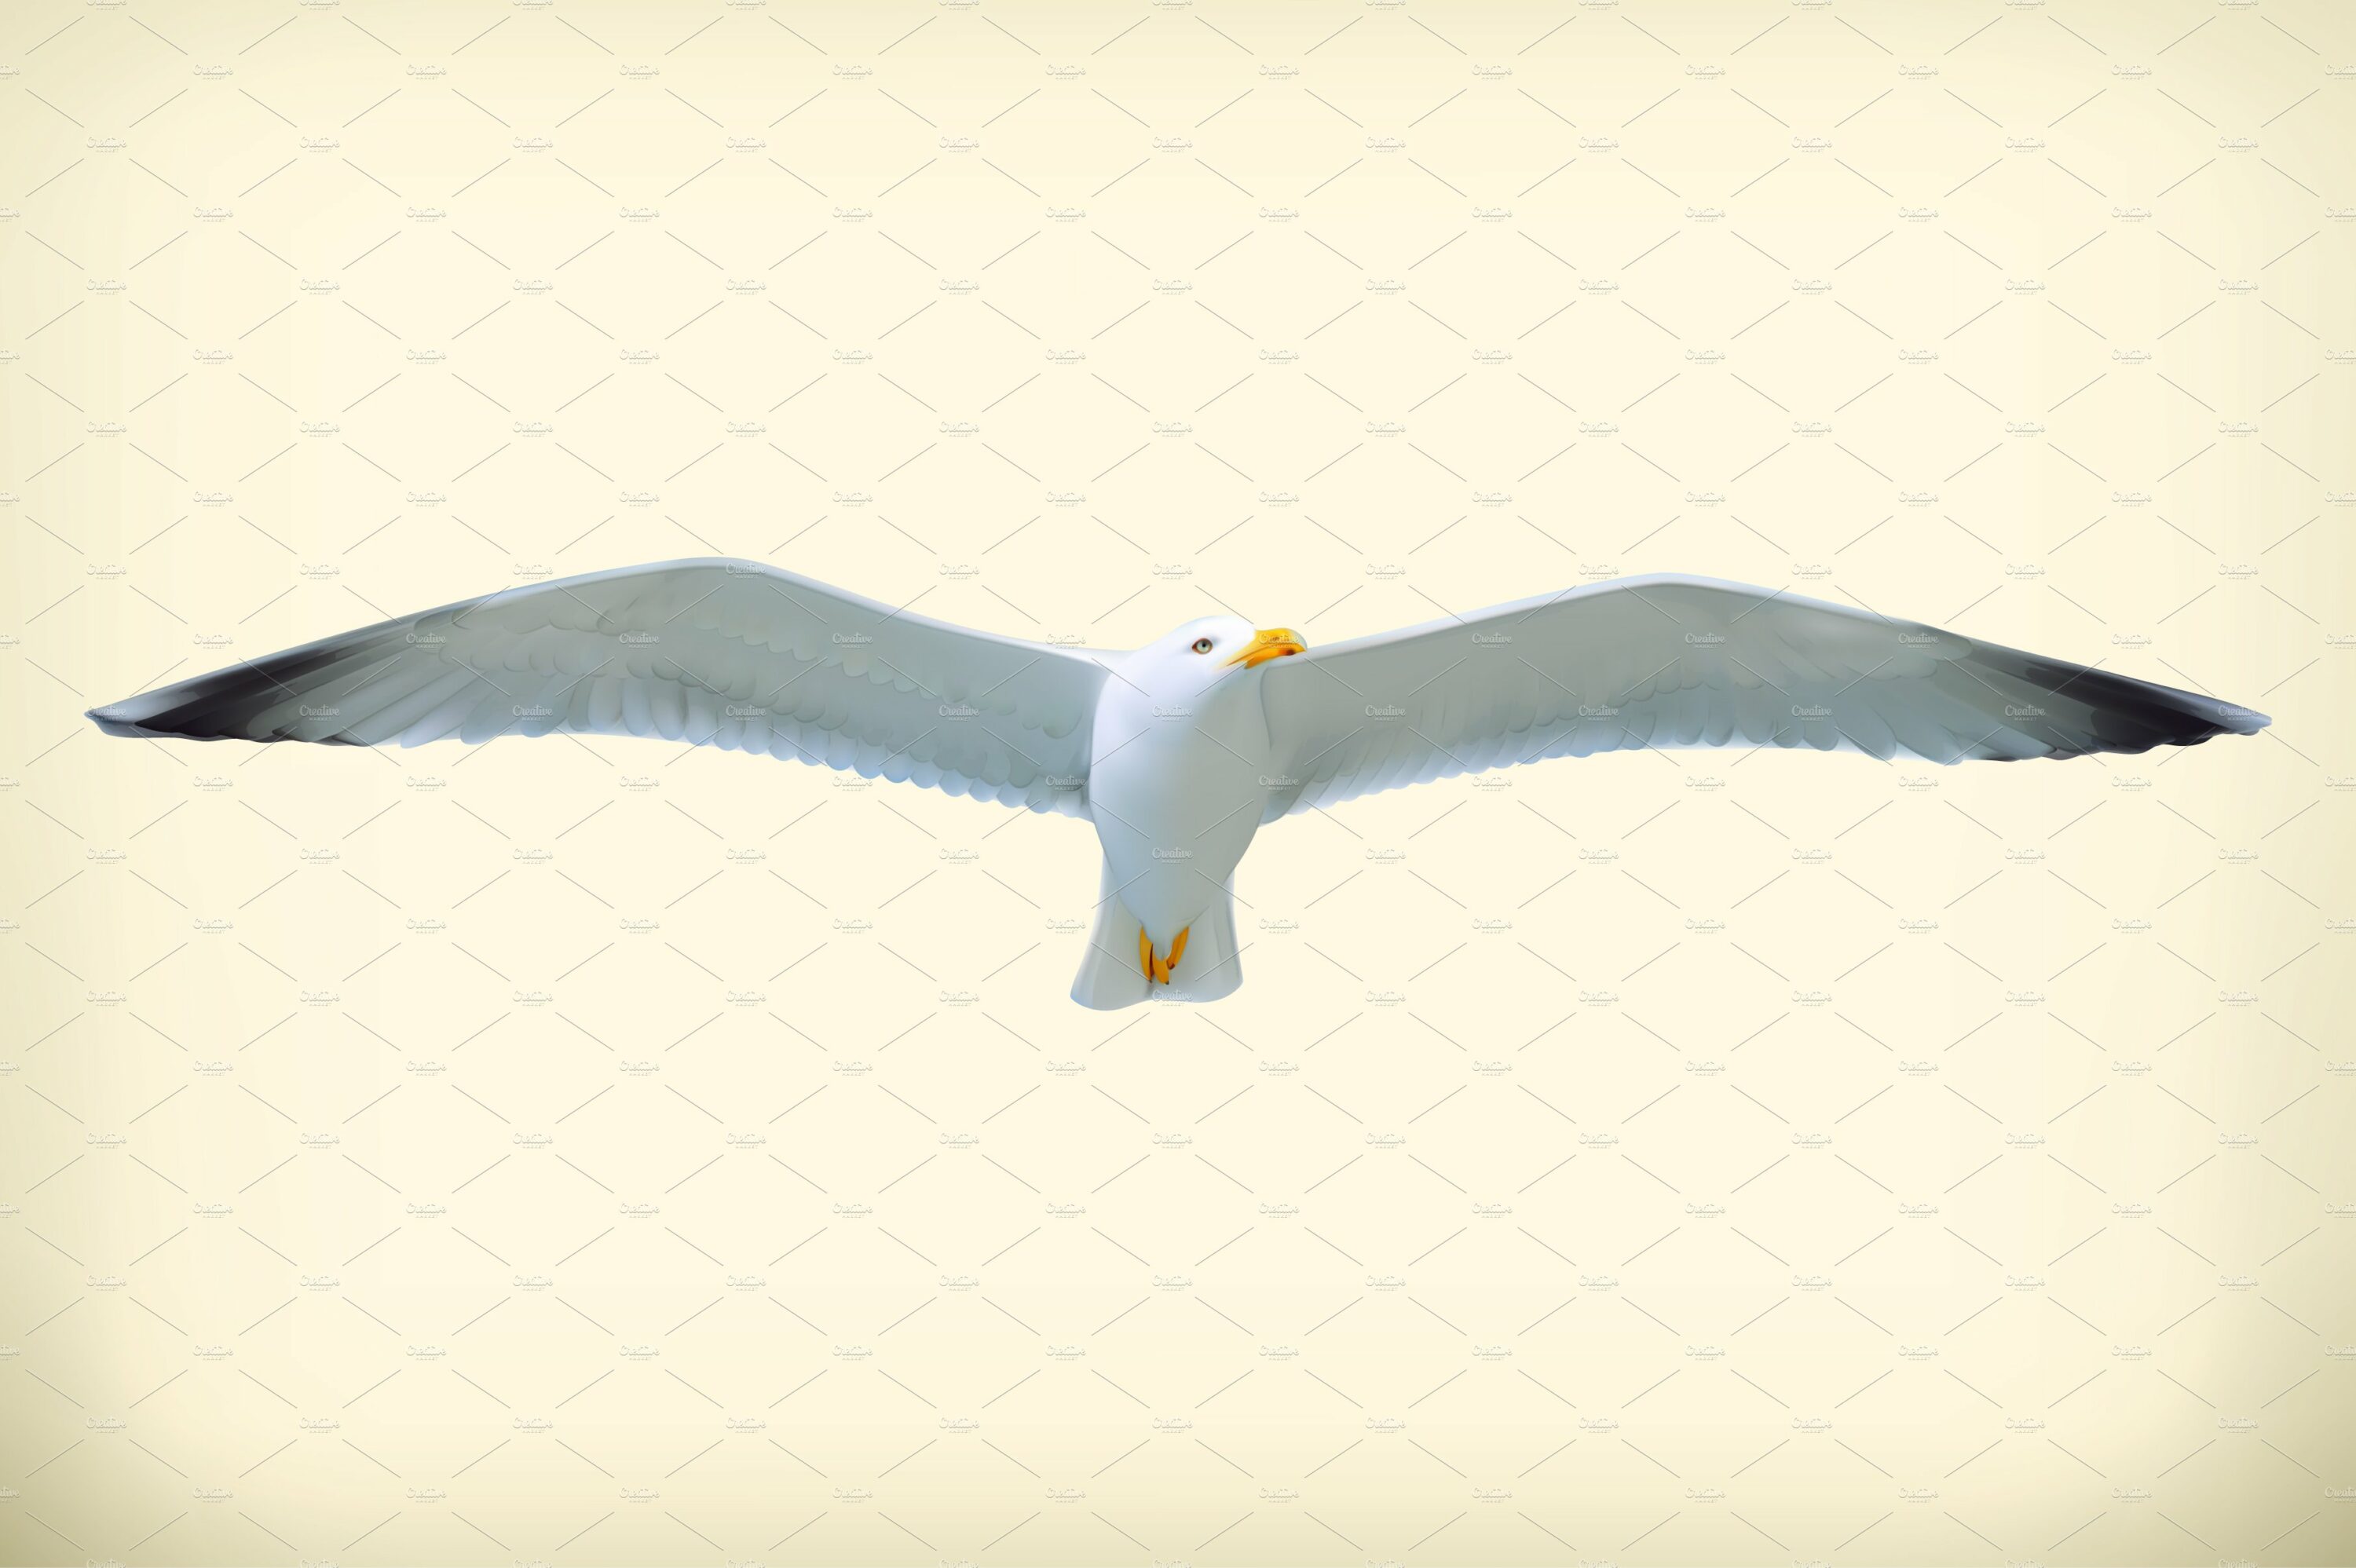 Flying seagull.